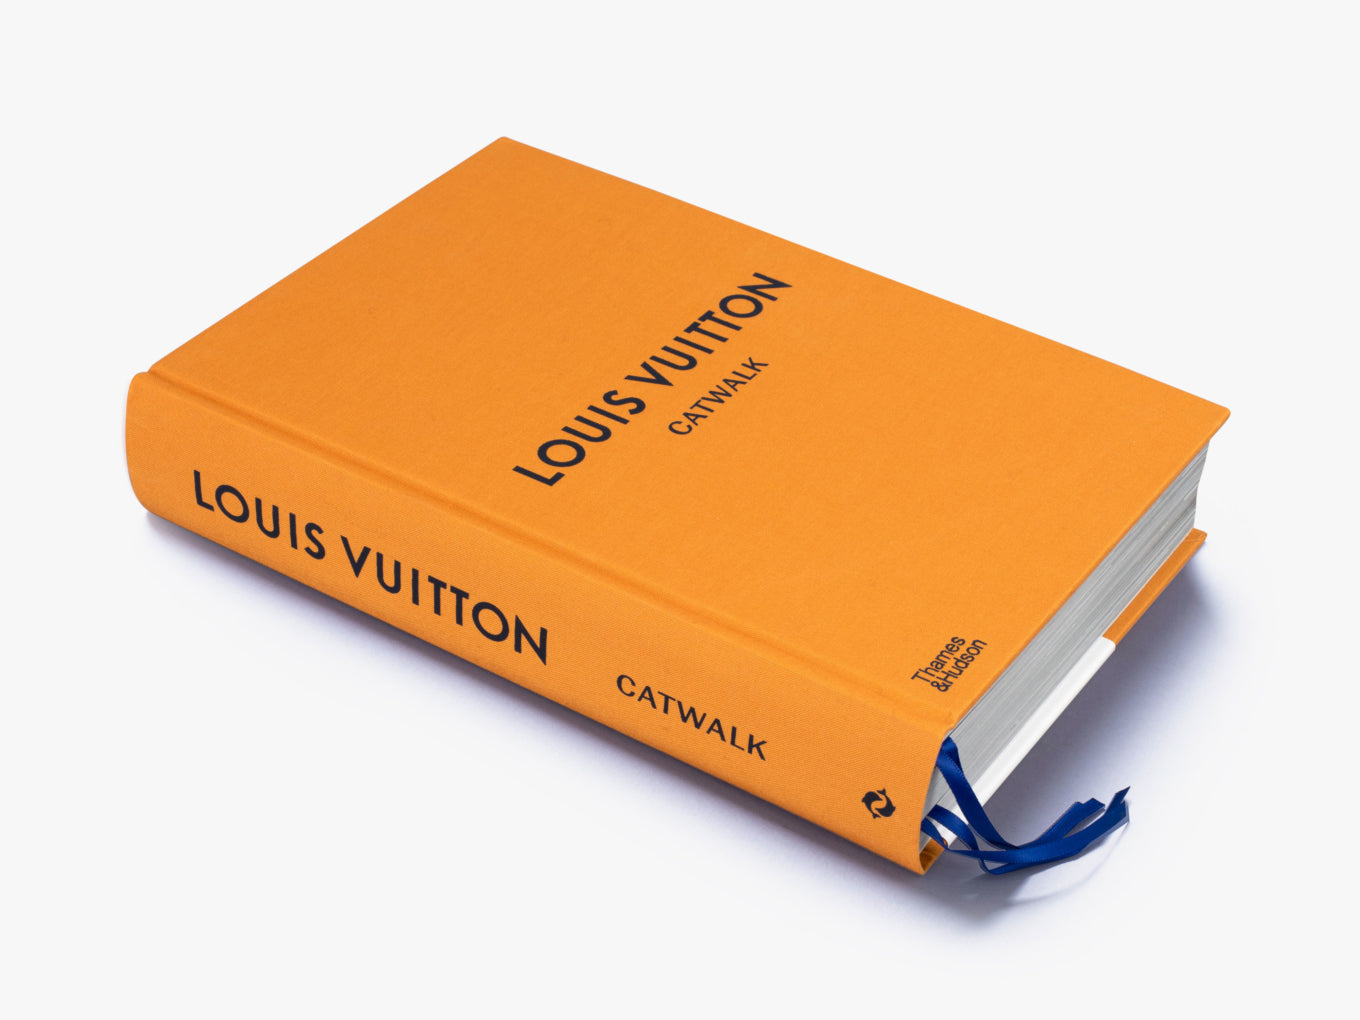 Little Book of Louis Vuitton – Oxford Exchange